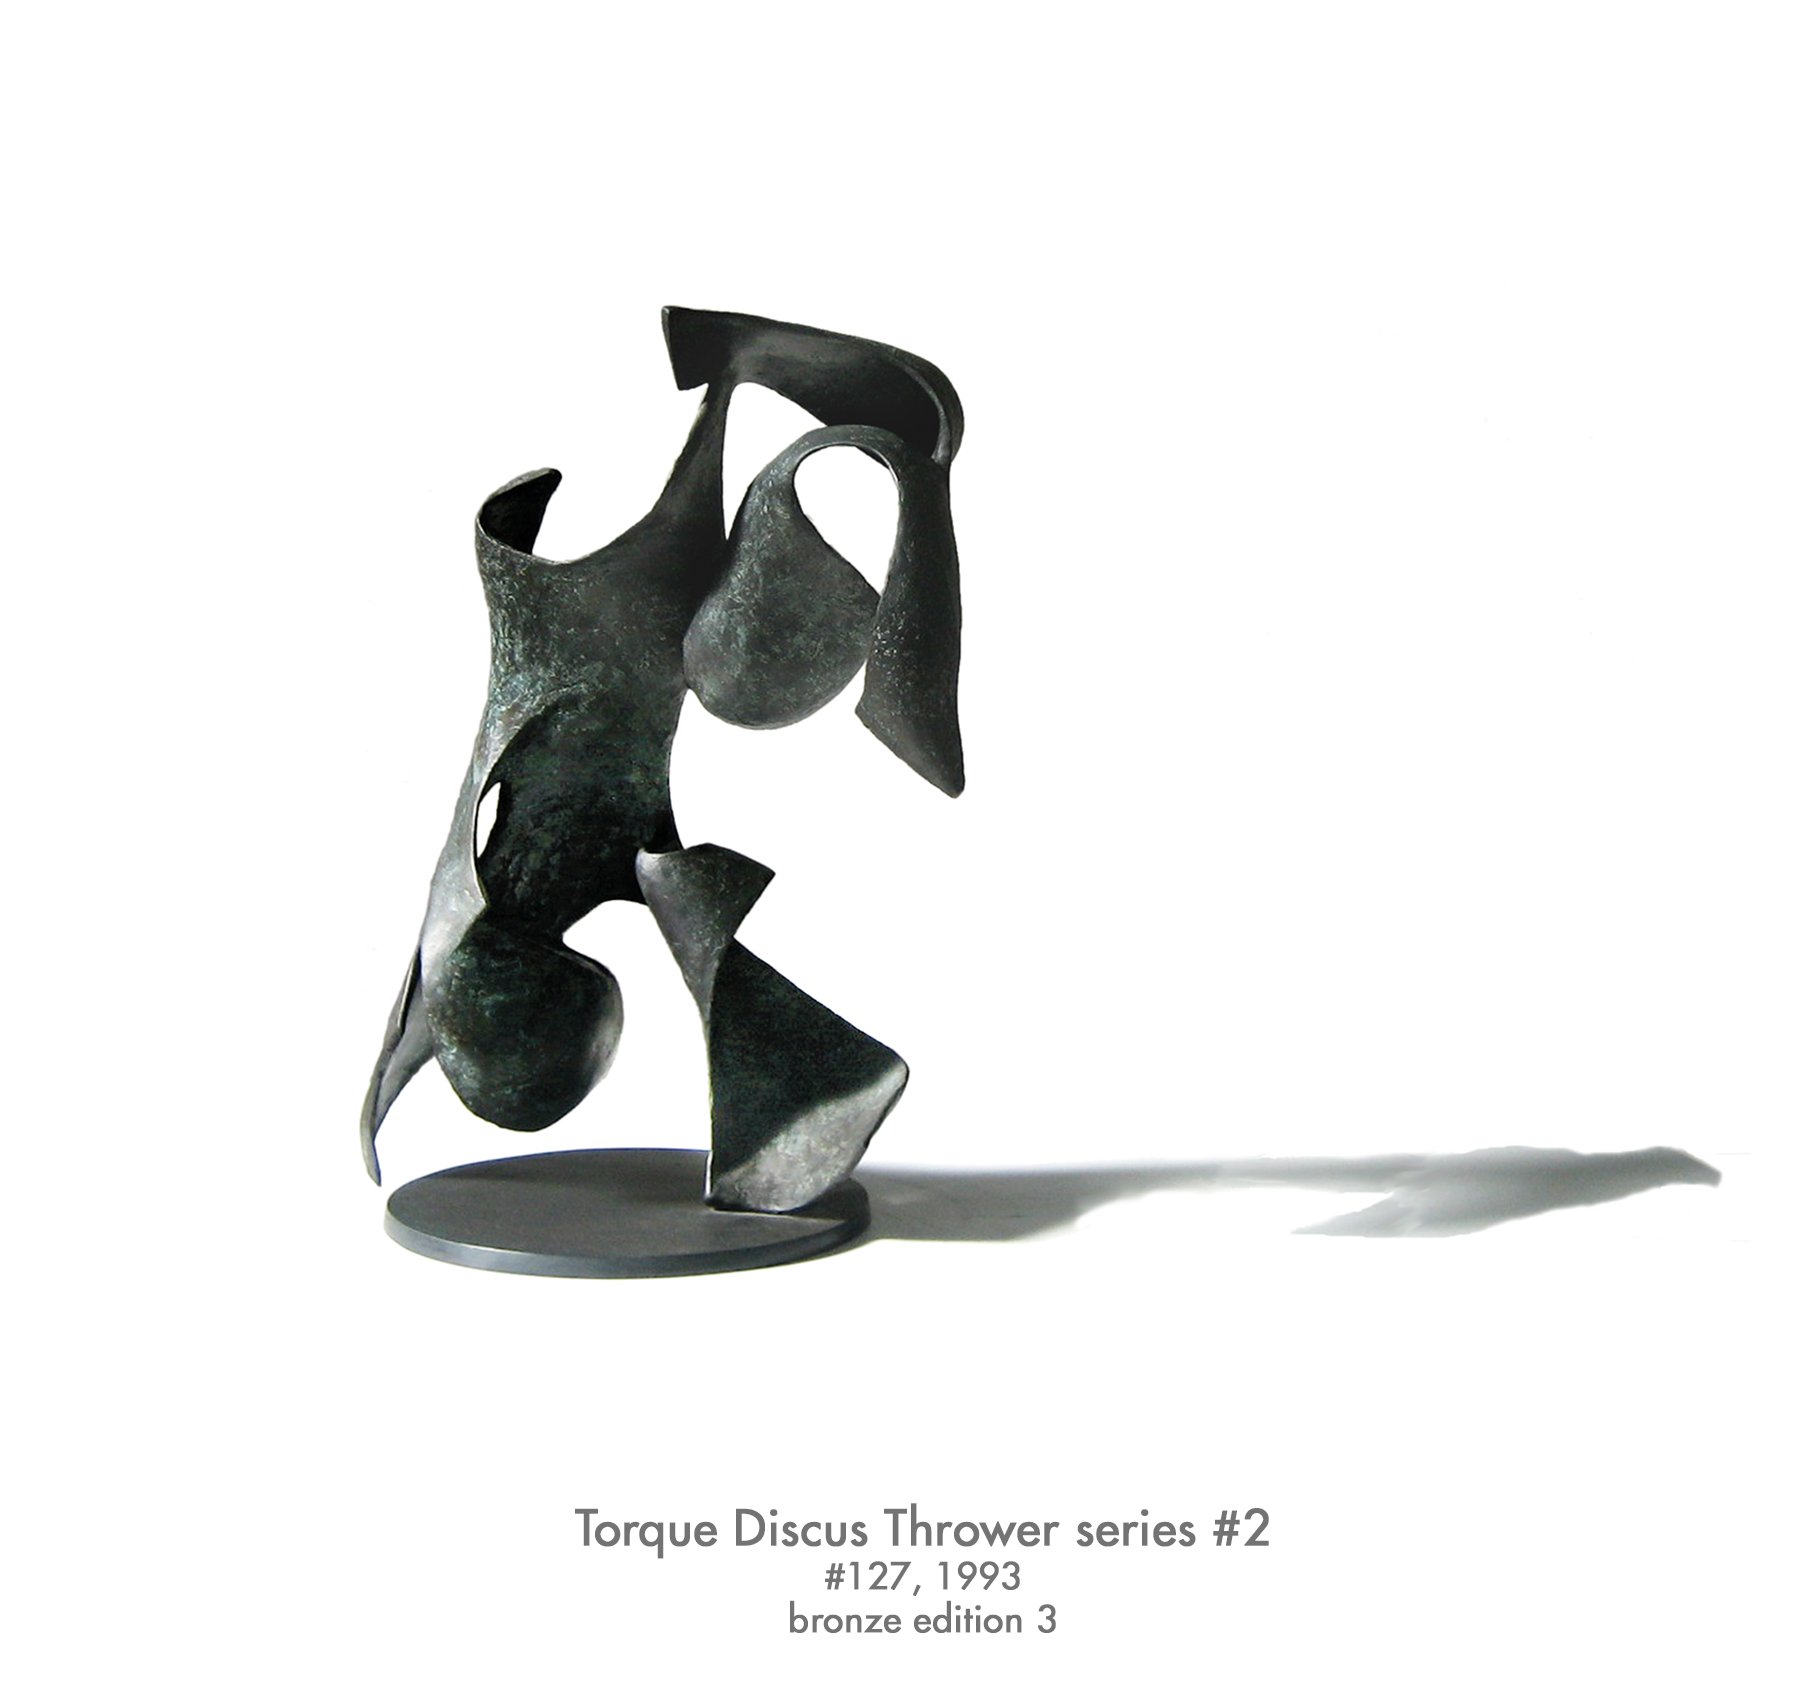 Torque Discus Thrower series 2, 1993, bronze, #127